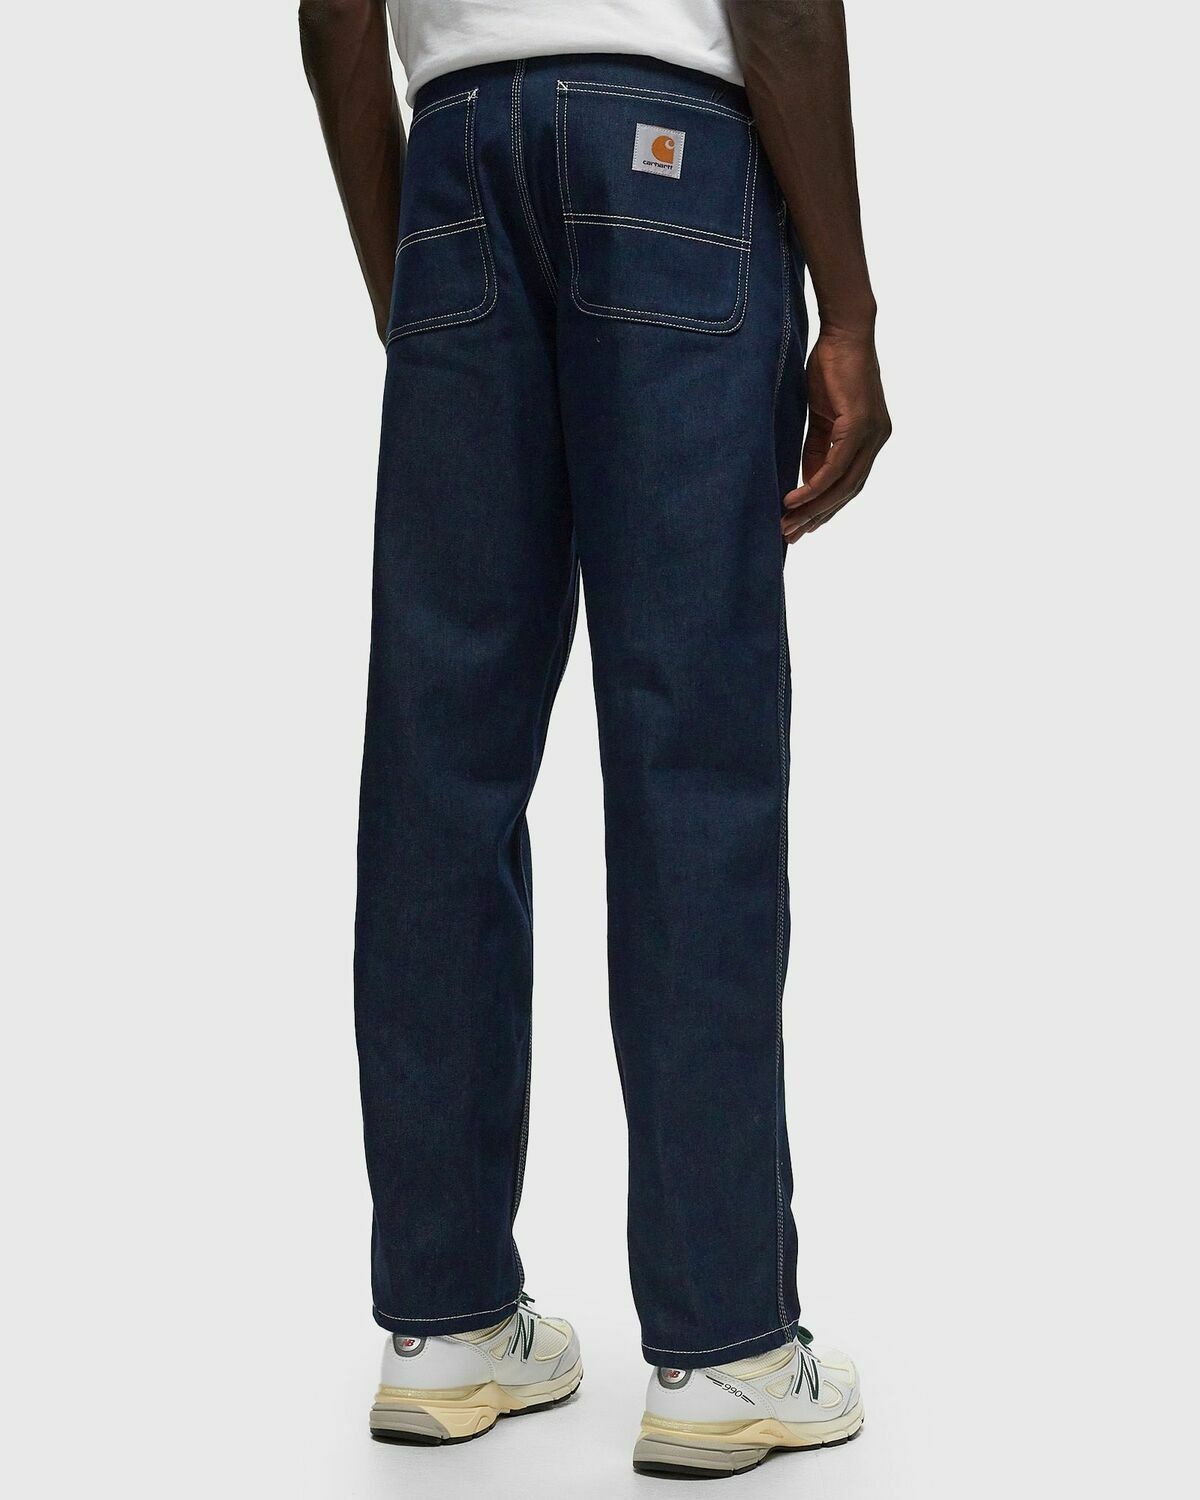 Carhartt Wip Simple Pant Blue - Mens - Jeans Carhartt WIP